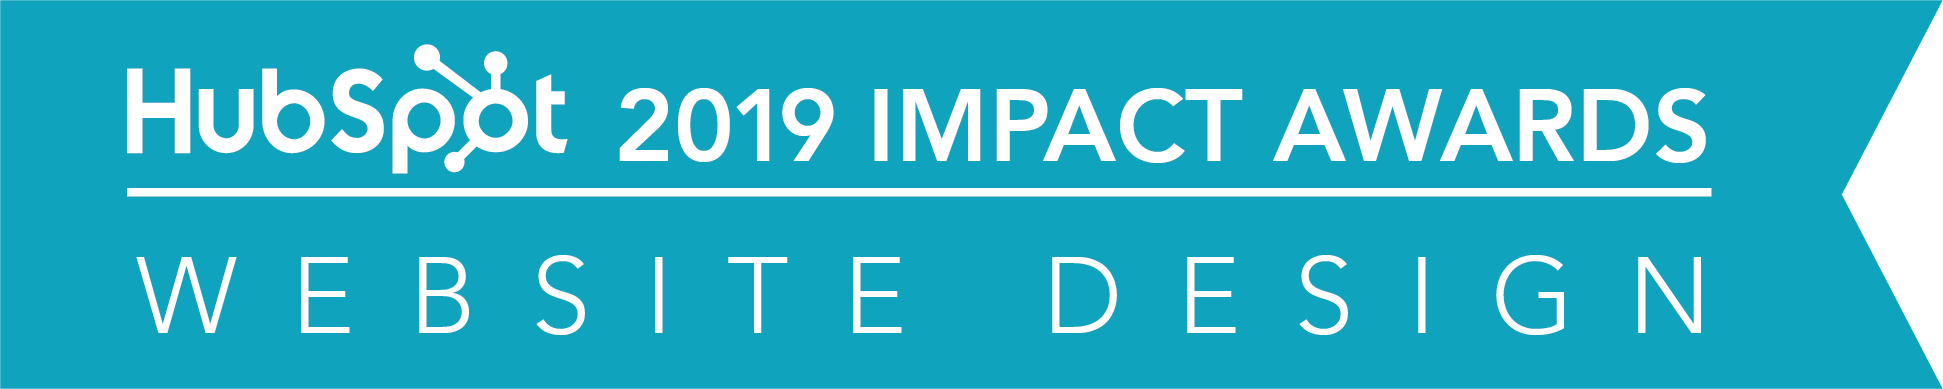 Hubspot_ImpactAwards_2019_WebsiteDesign-02